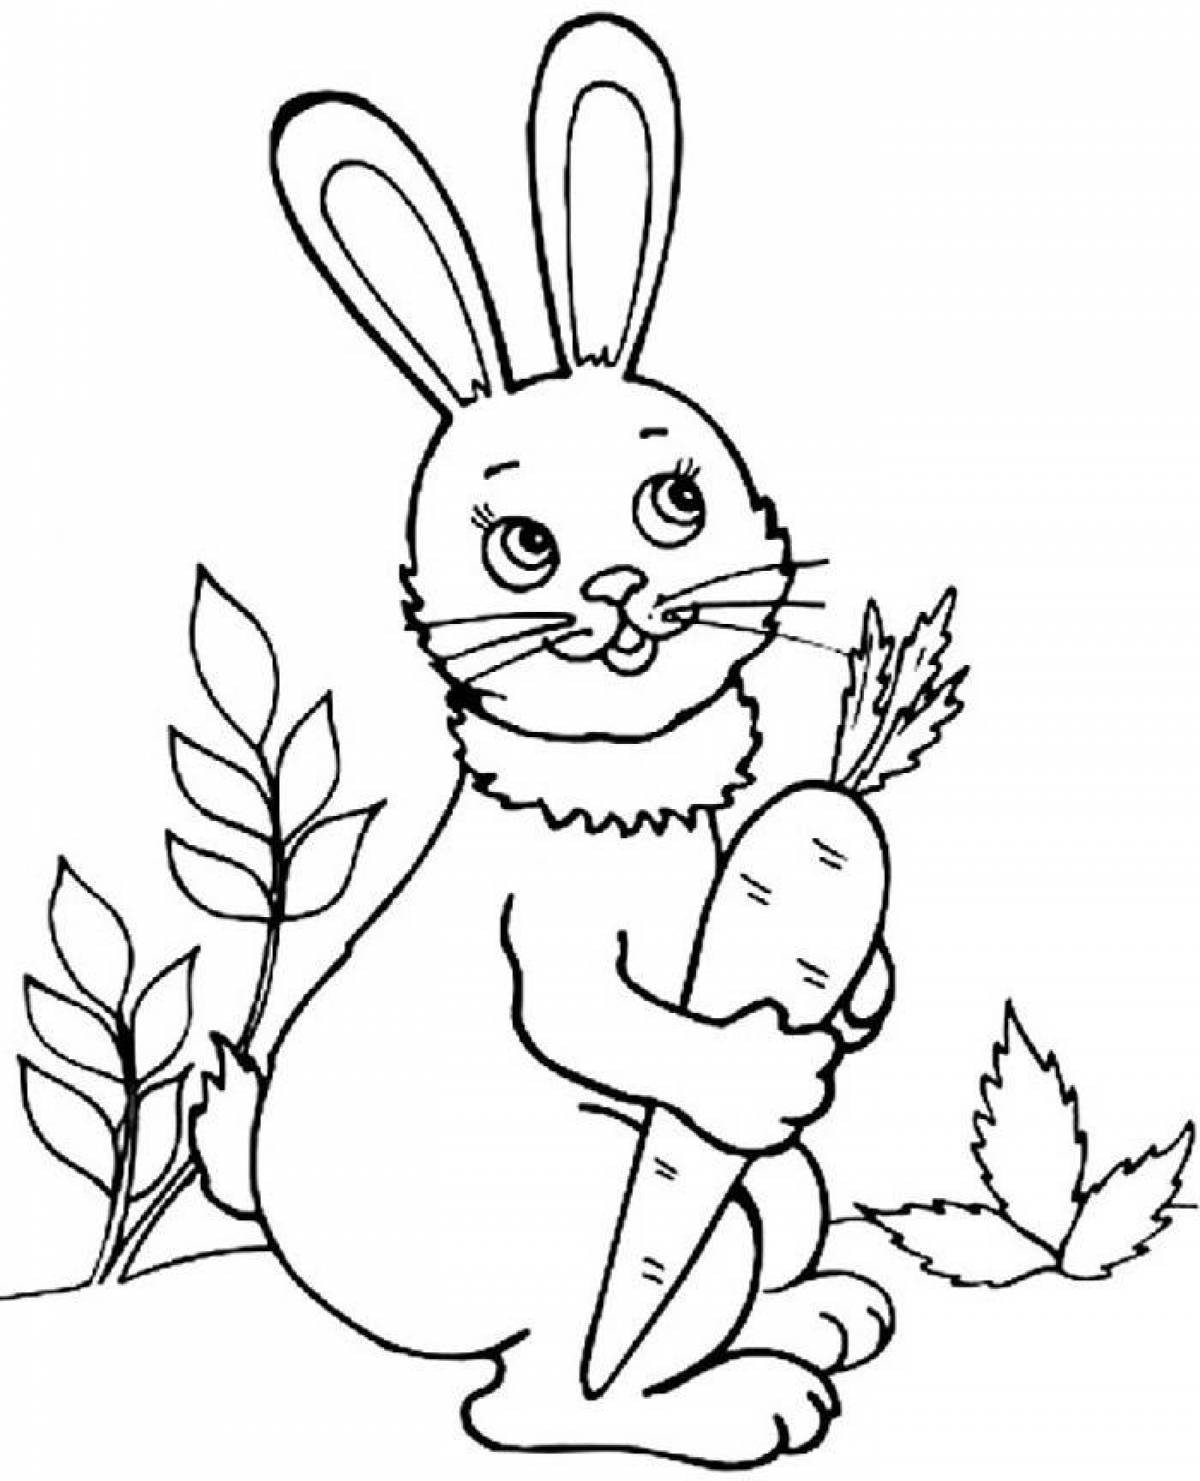 Children's bunny coloring book